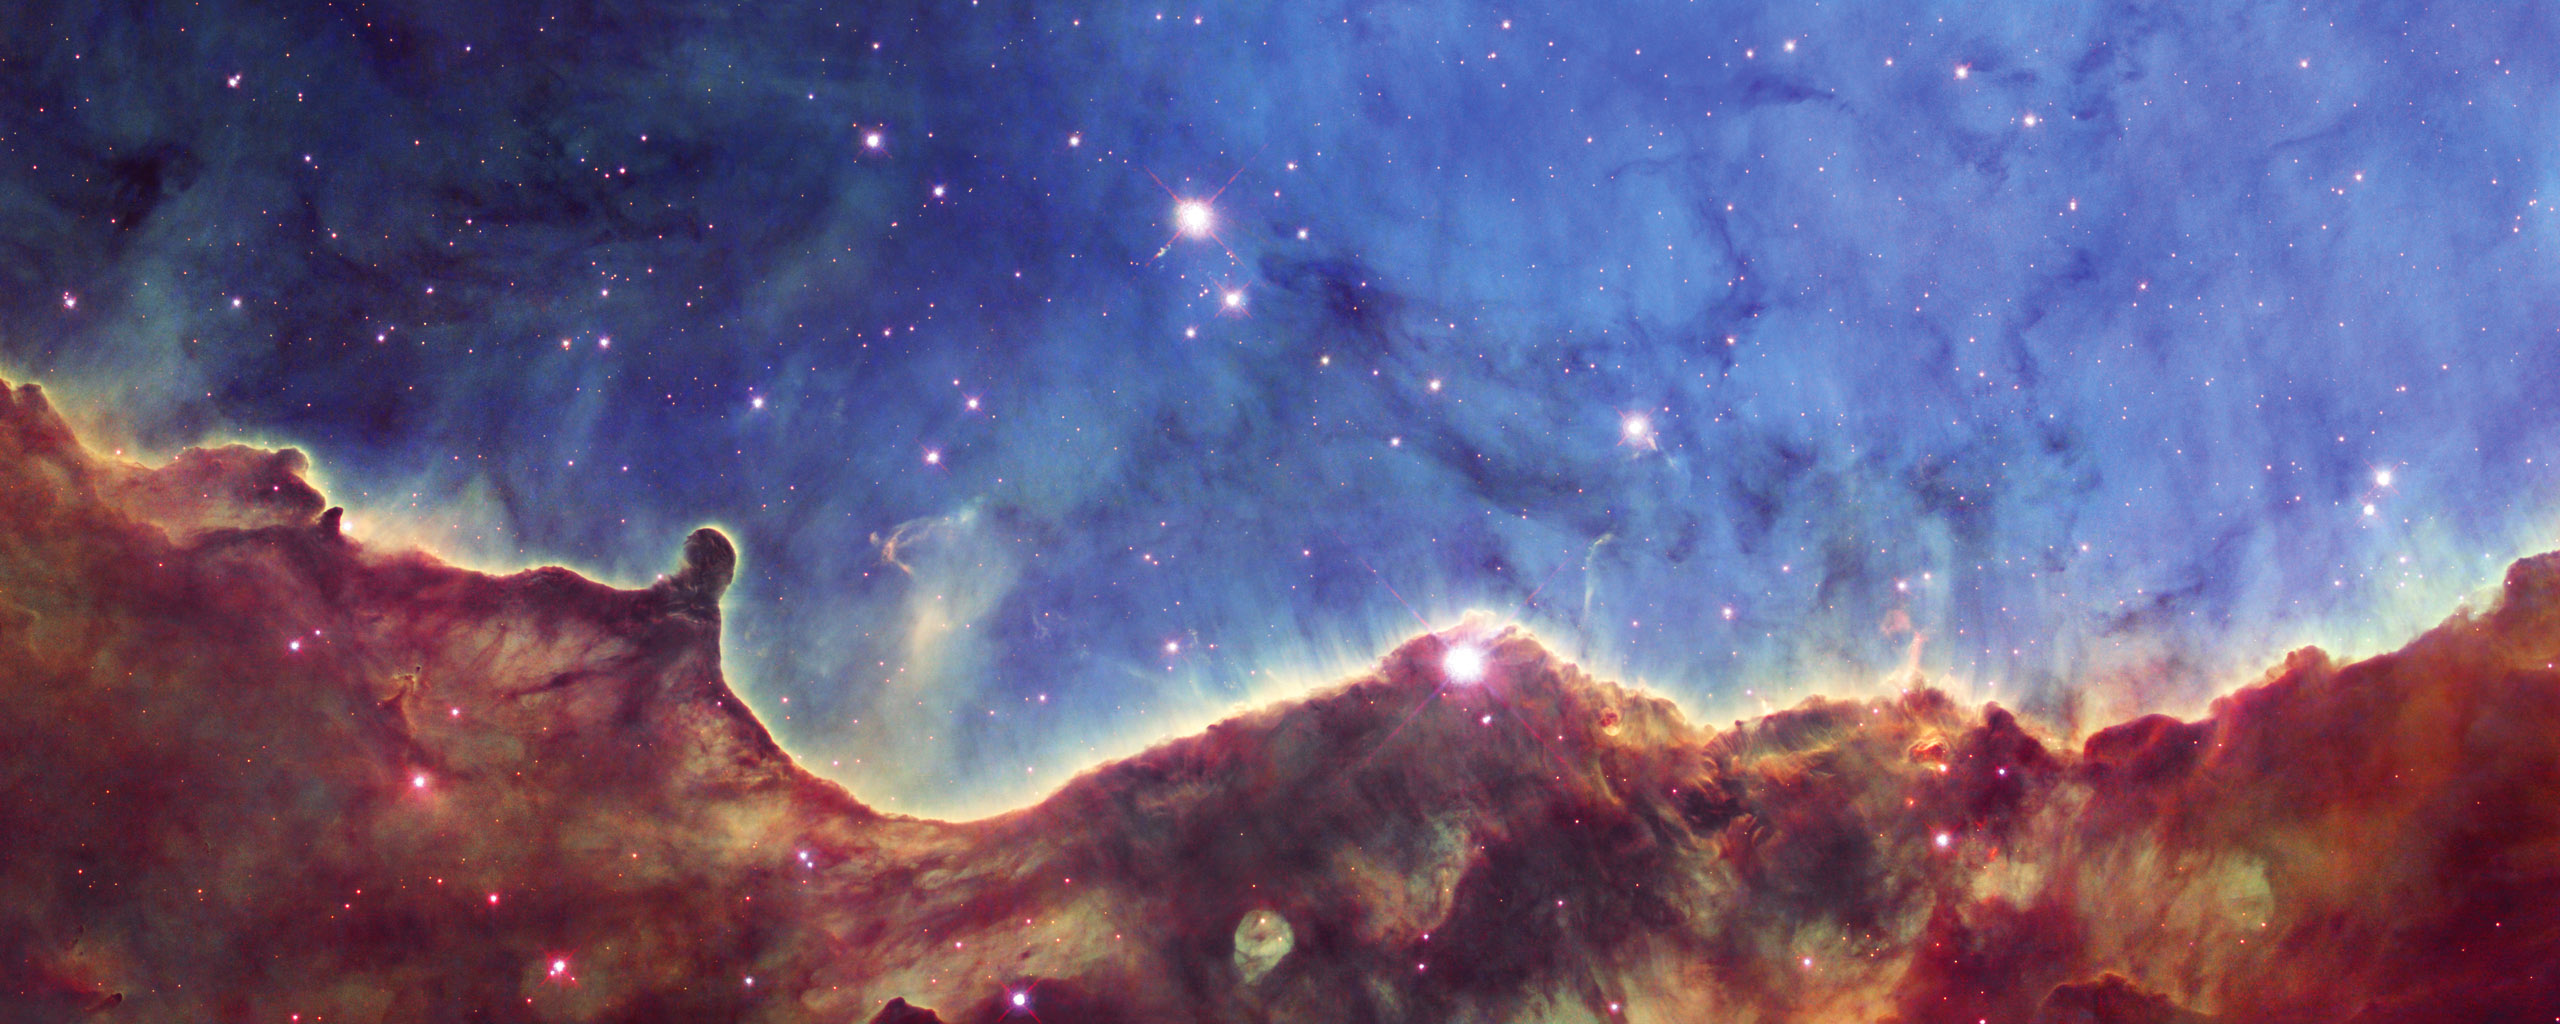 Carina Nebula Desktop And Mobile Wallpaper Wallippo